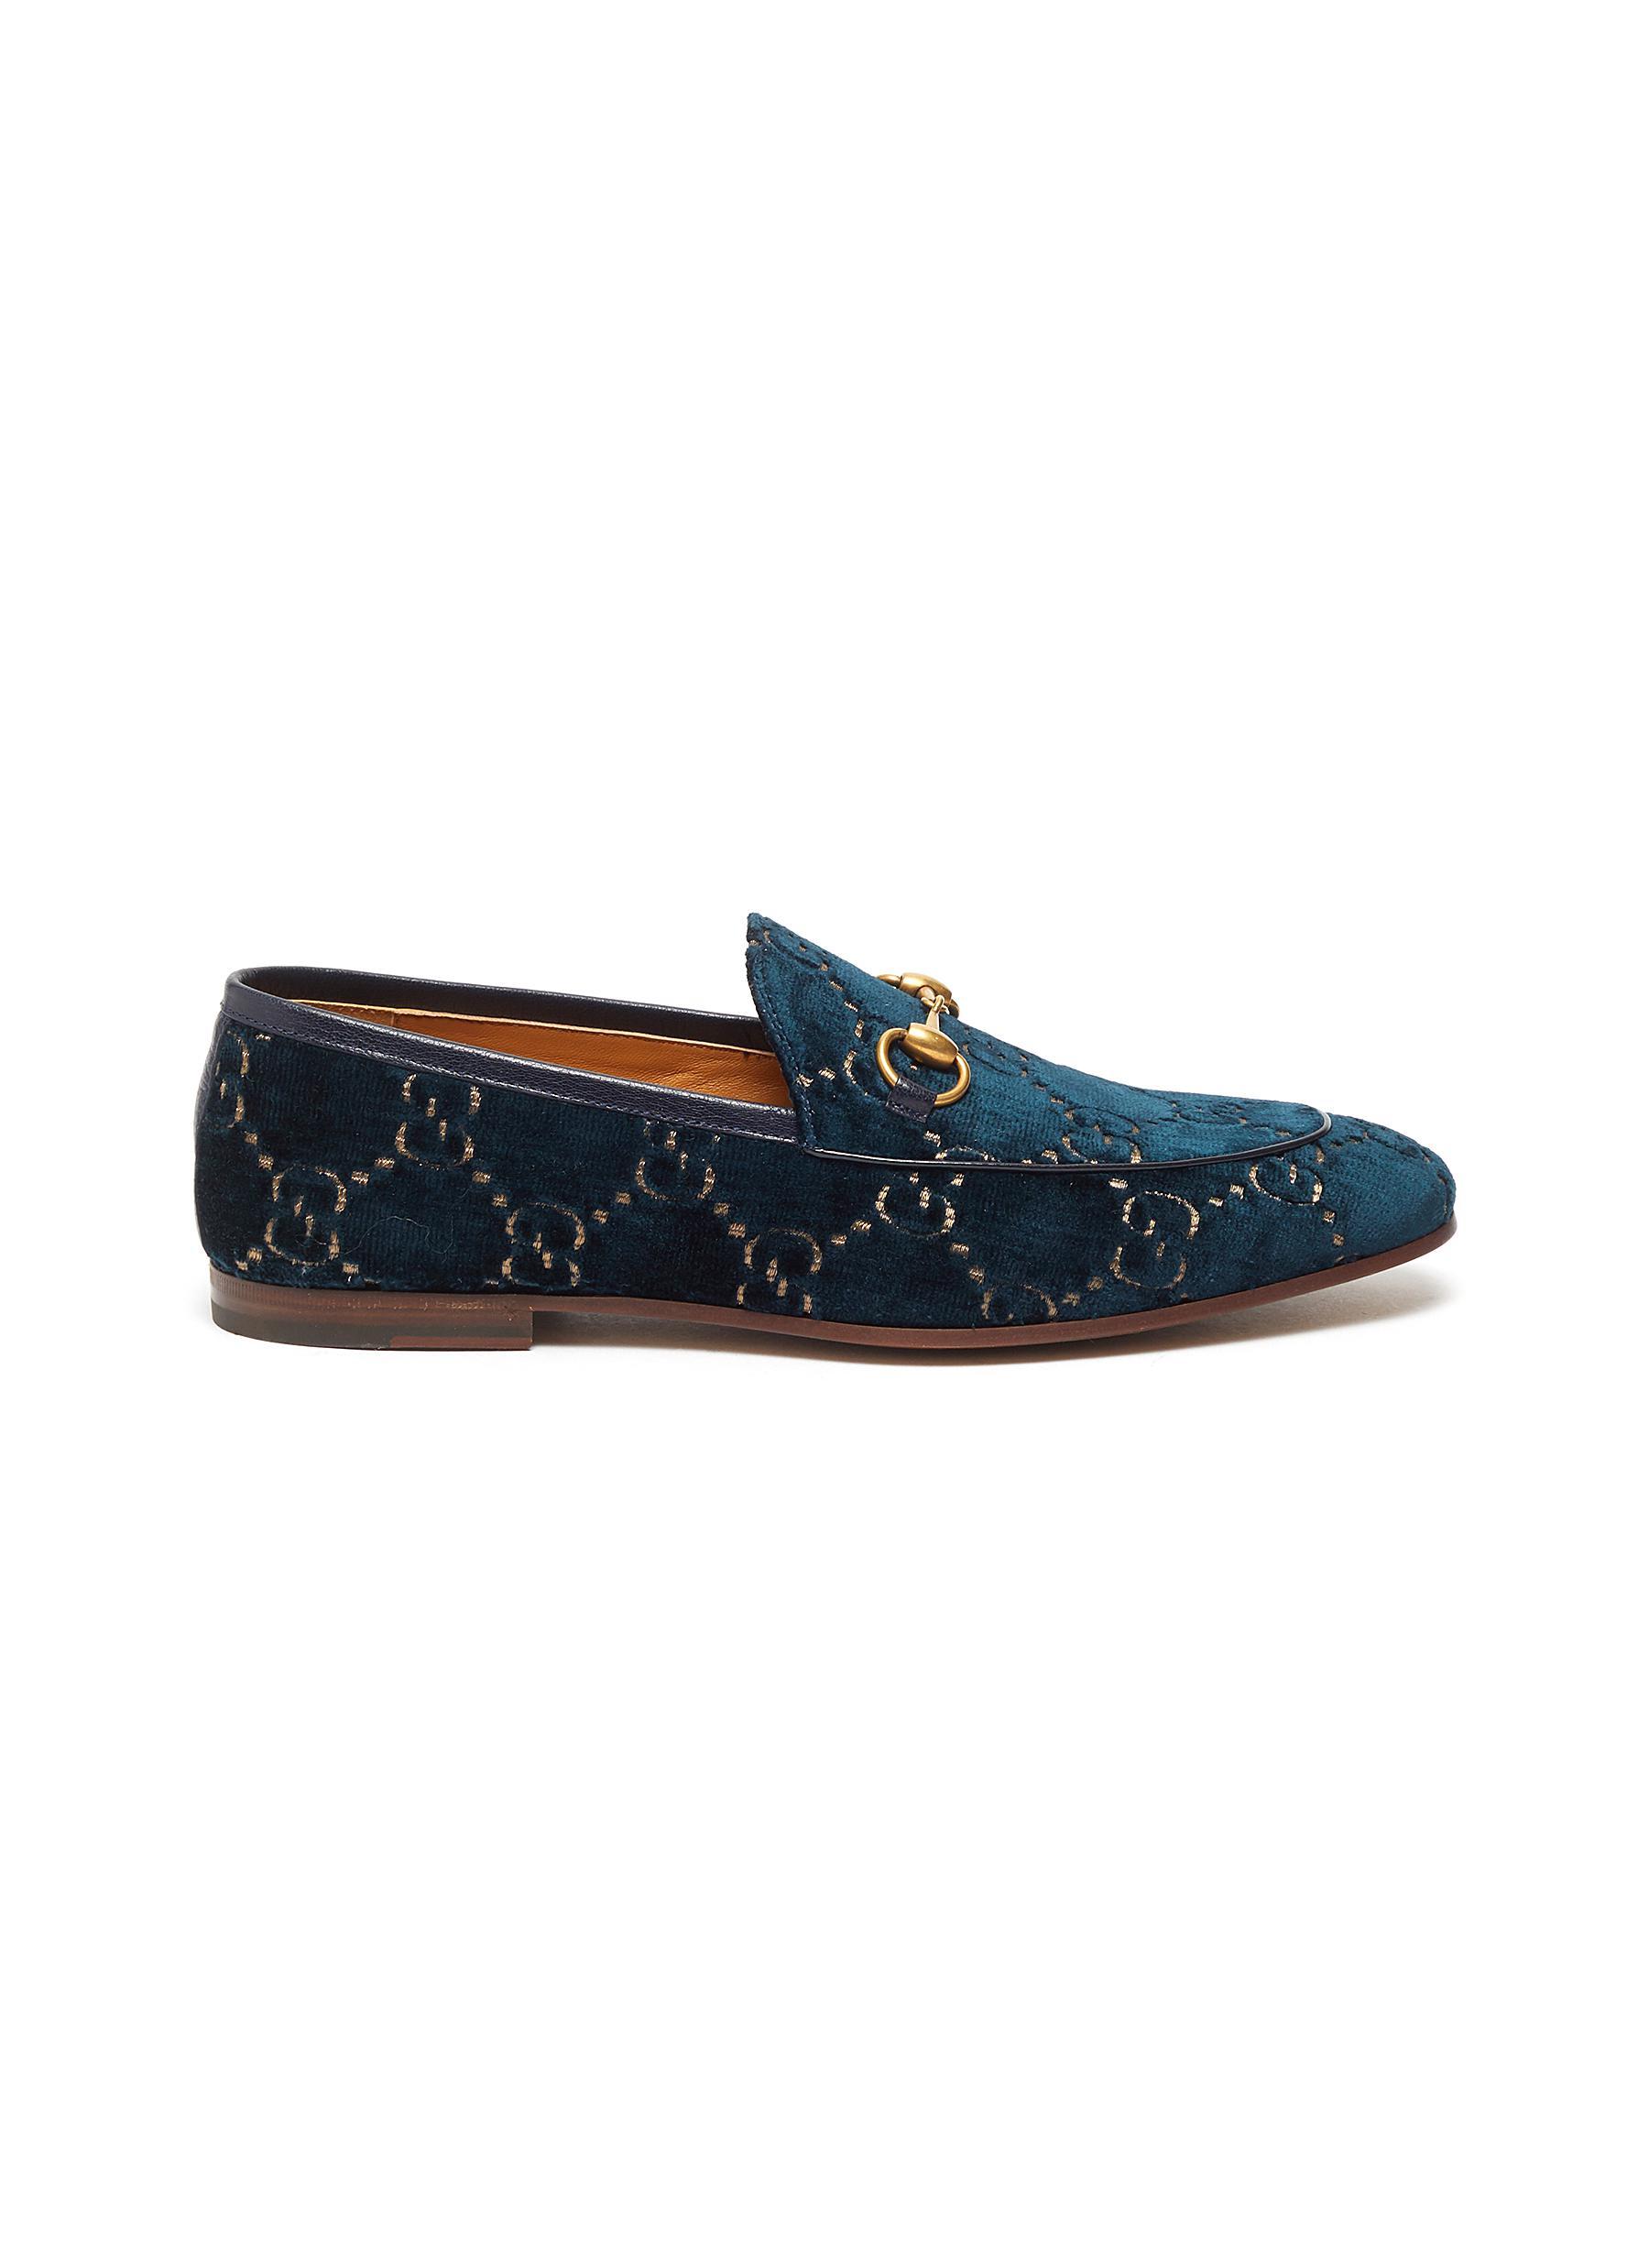 Gucci Jordaan GG Velvet Loafers in Navy (Blue) for Men - Save 37% - Lyst